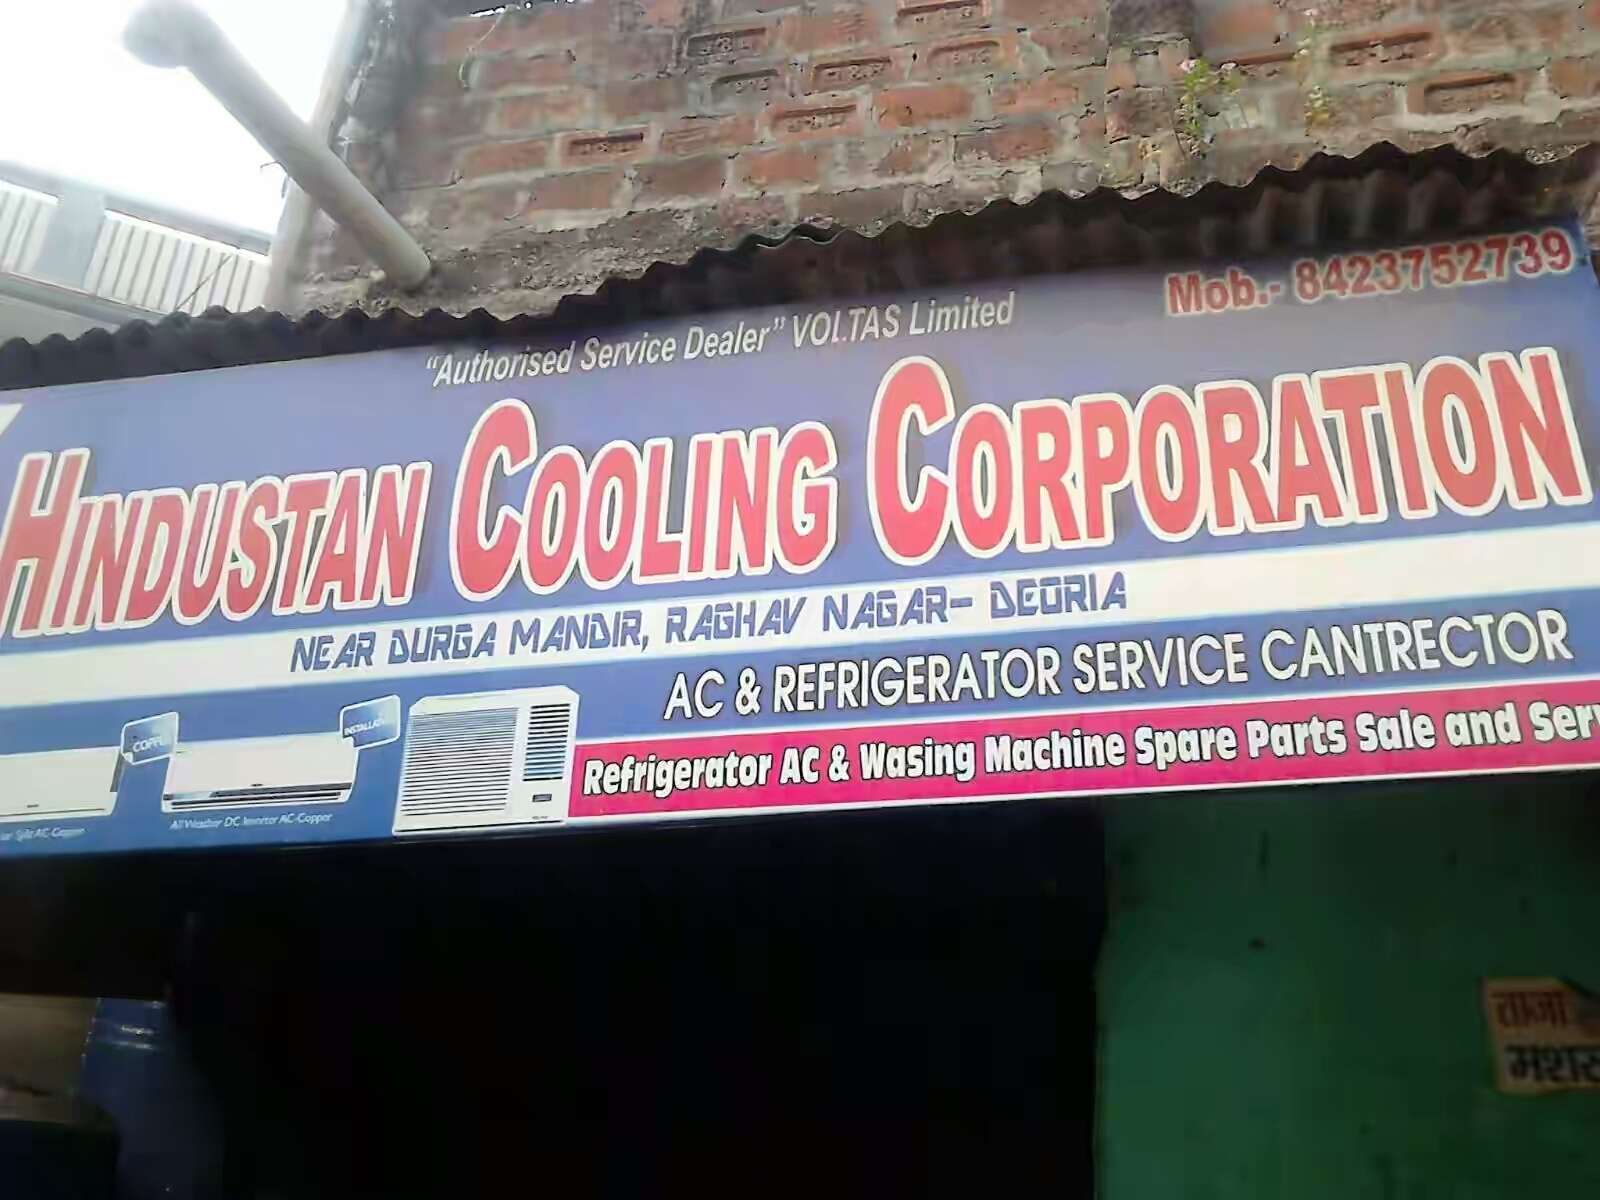 Hindustan Cooling Corporation